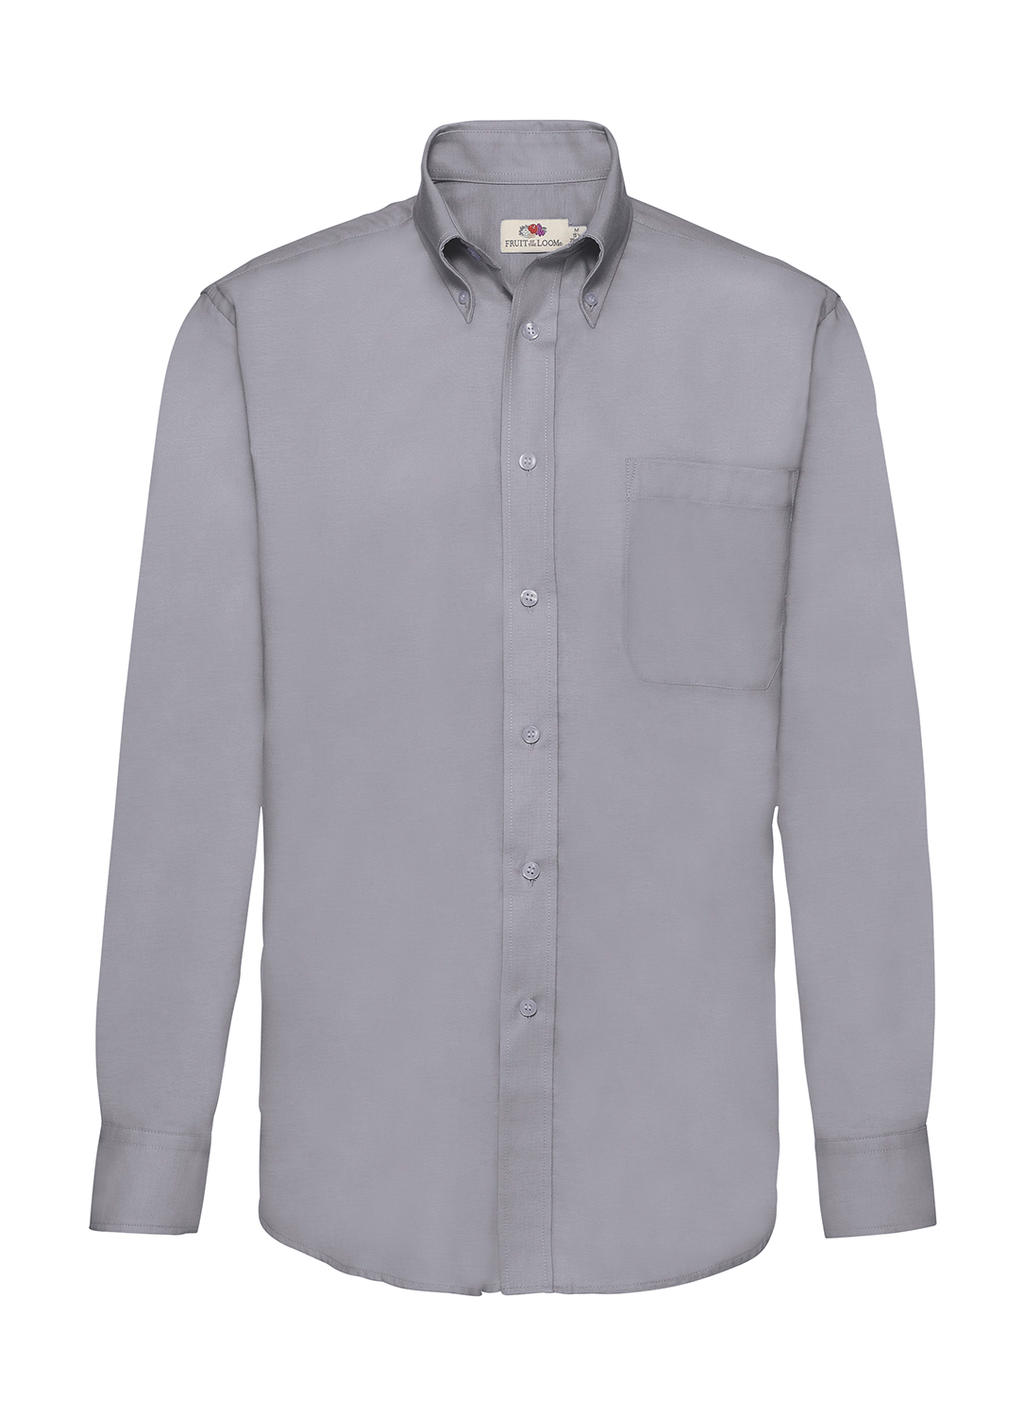  Oxford Shirt LS in Farbe Oxford Grey